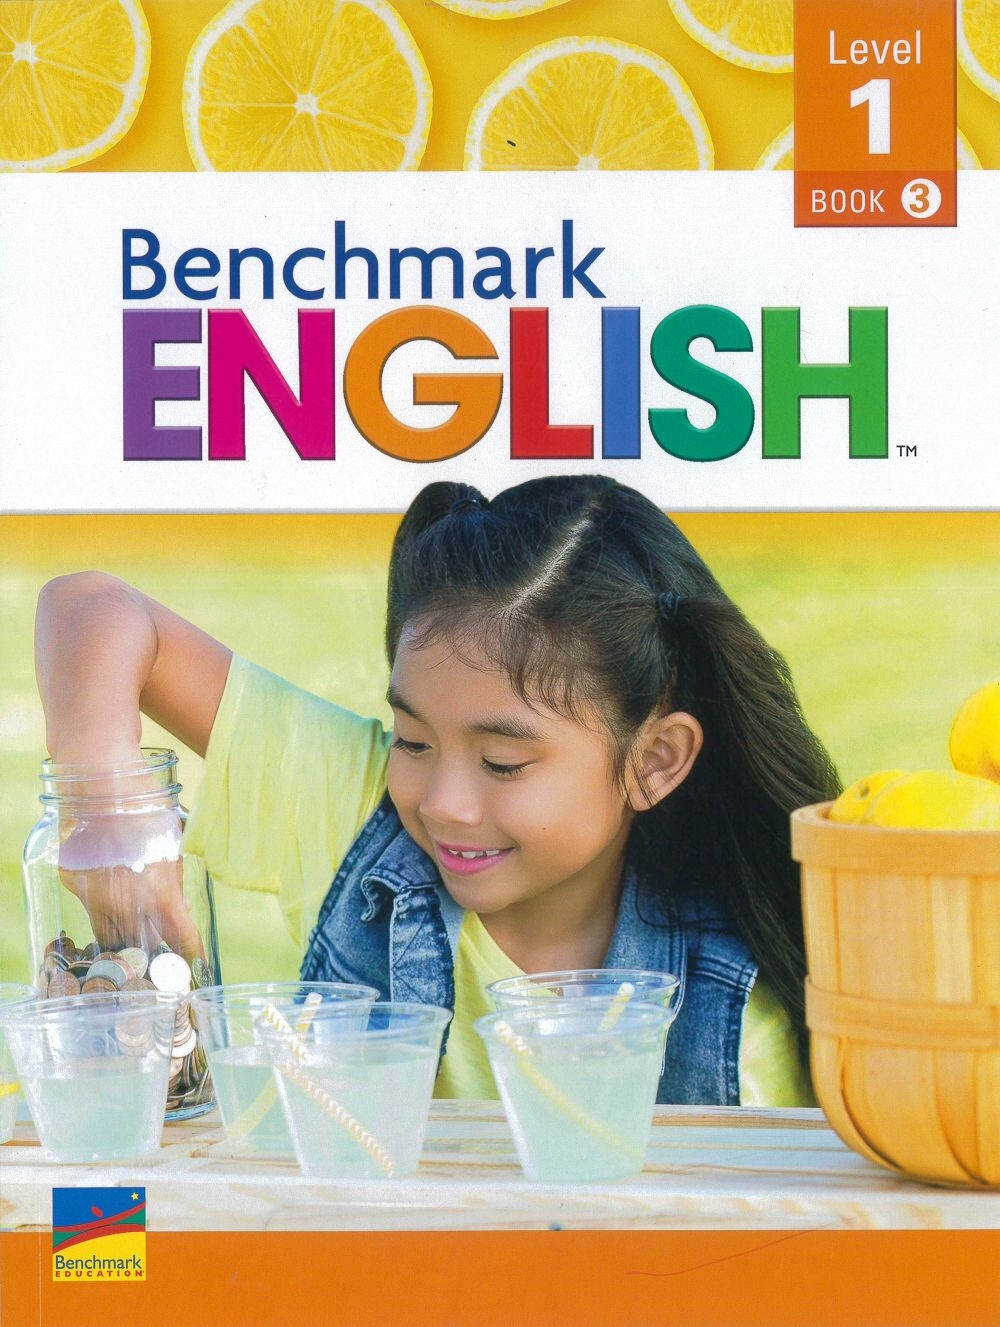 Benchmark English (1) Module 3 Student Book